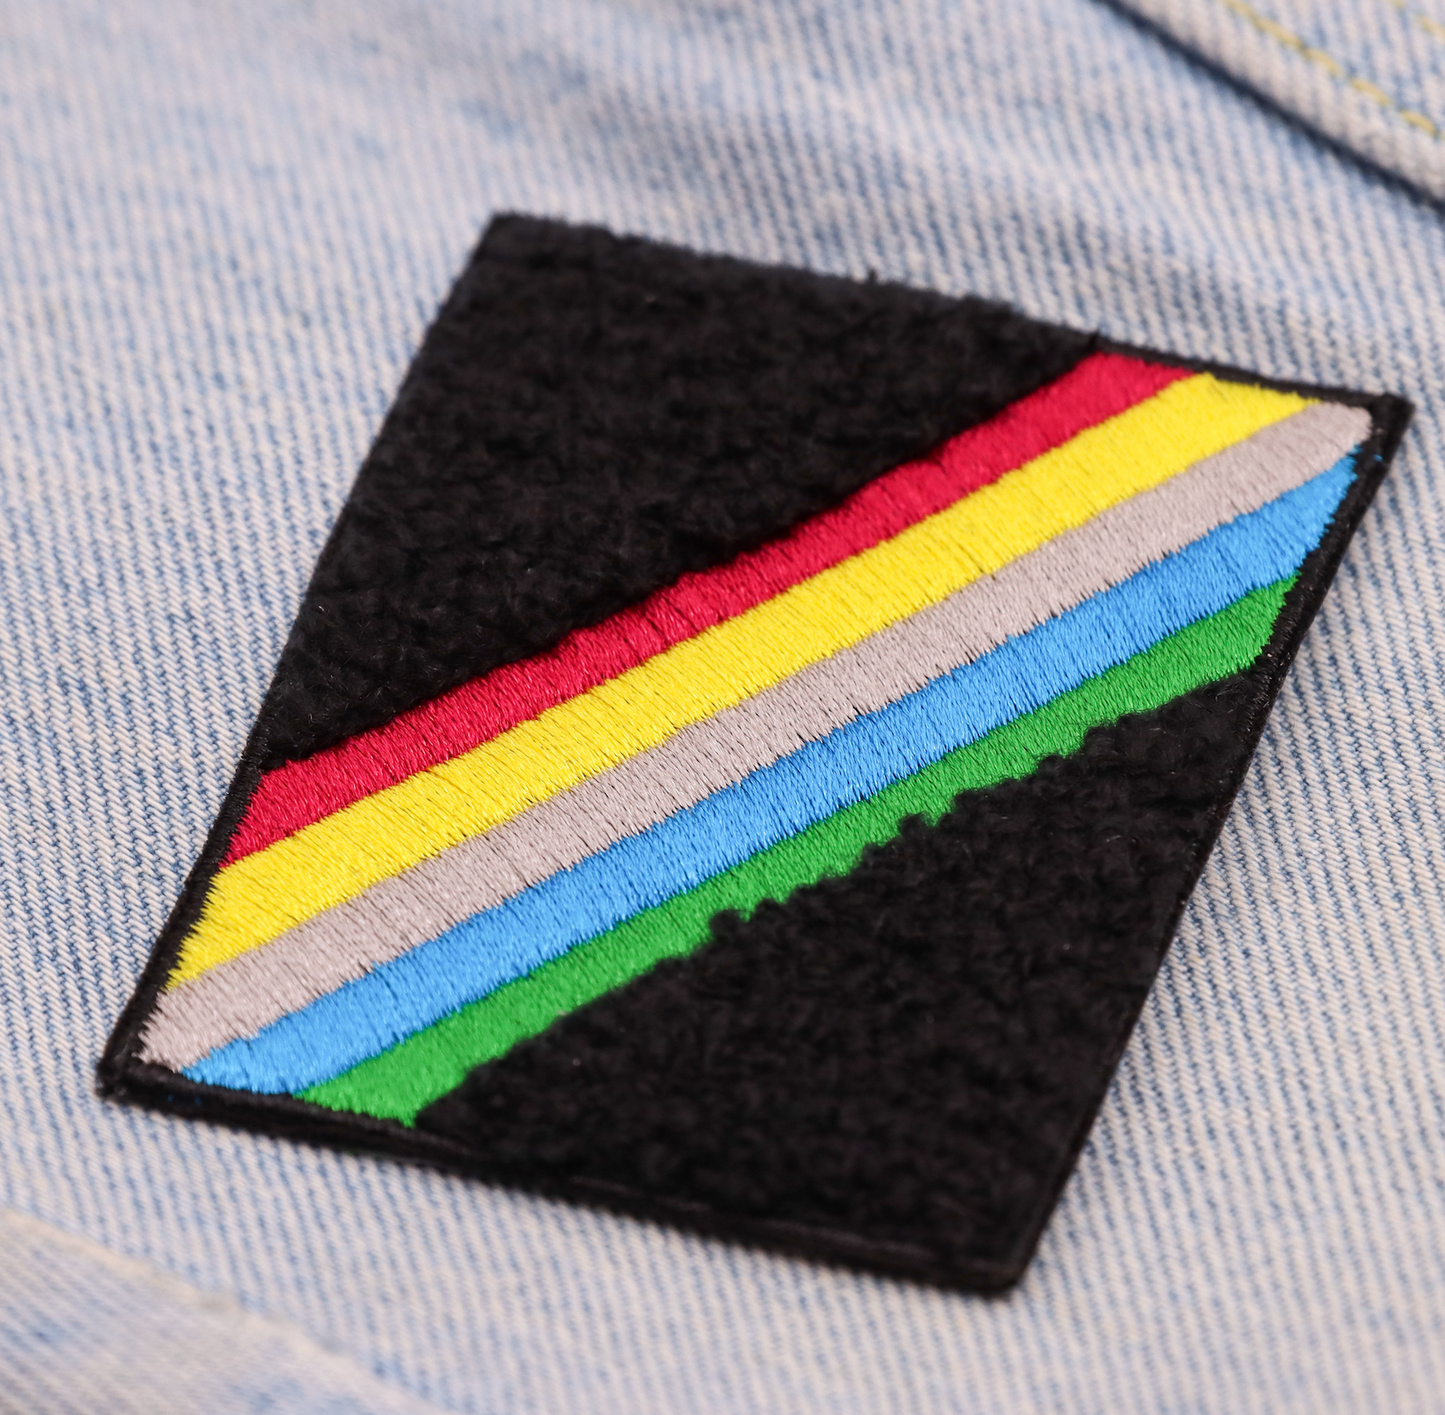 Disability pride flag enamel pin